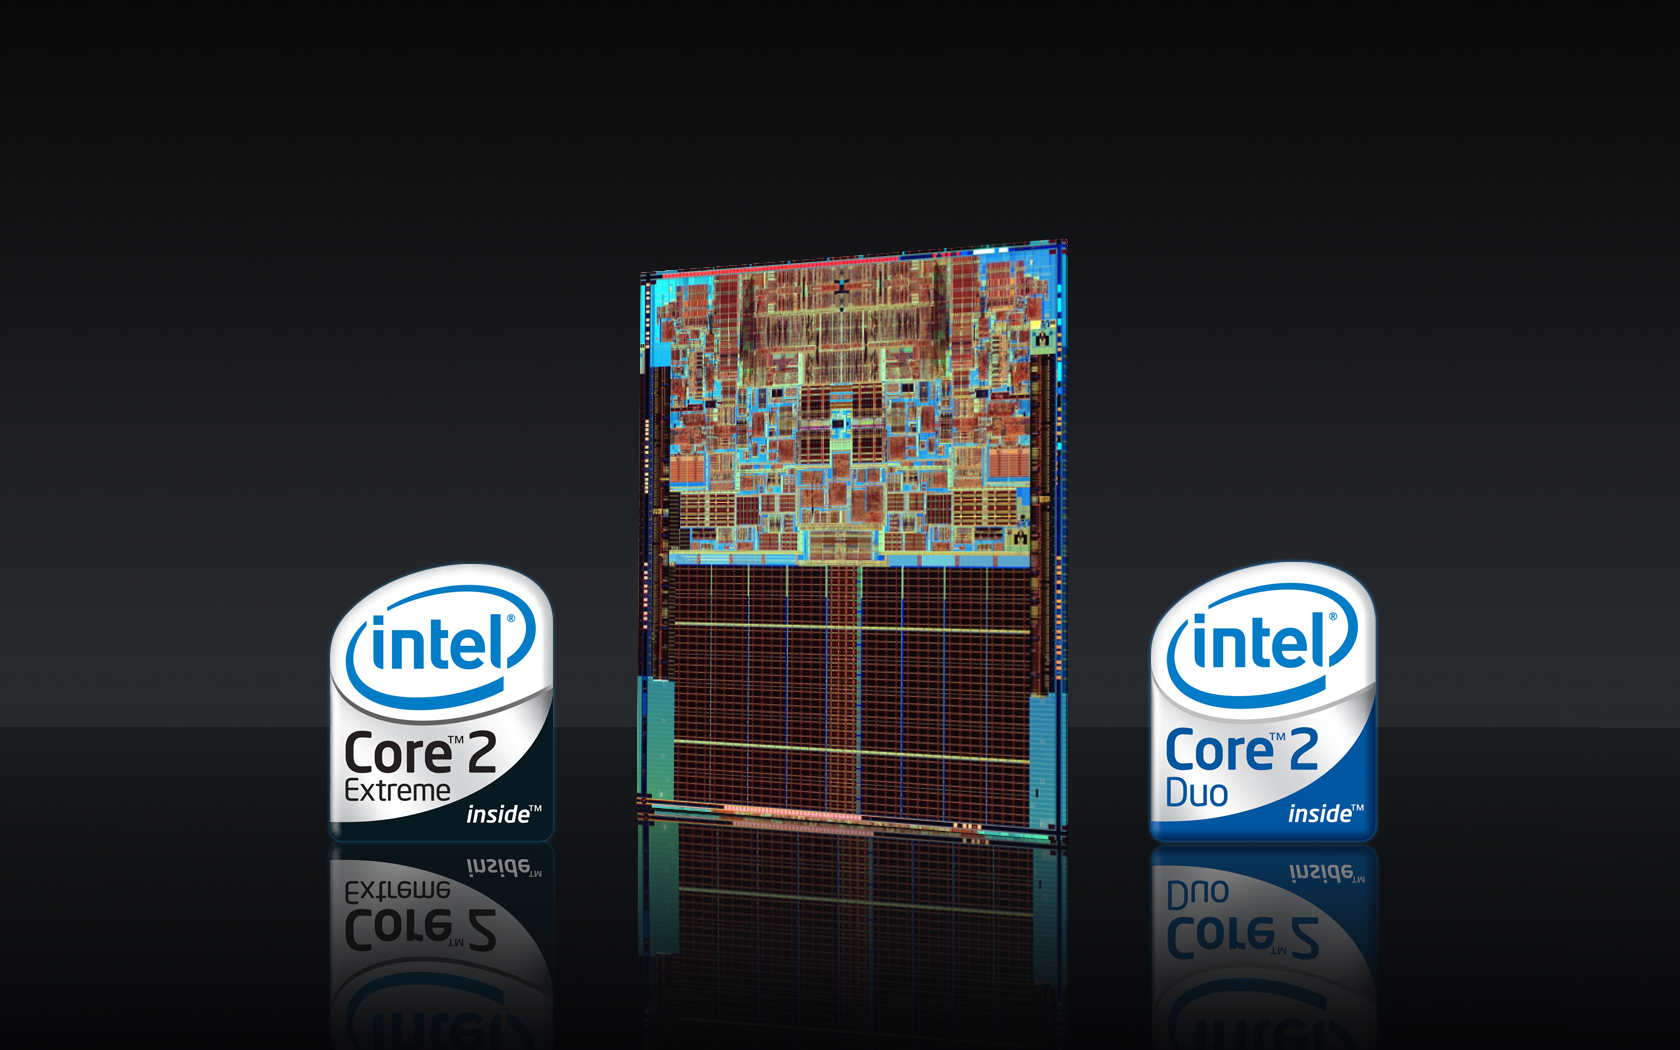 Интел 2 дуо. Intel Core 2x Duo. Intel Core 2 Duo inside. Ячейка Intel Core 2 Duo. Reg intel